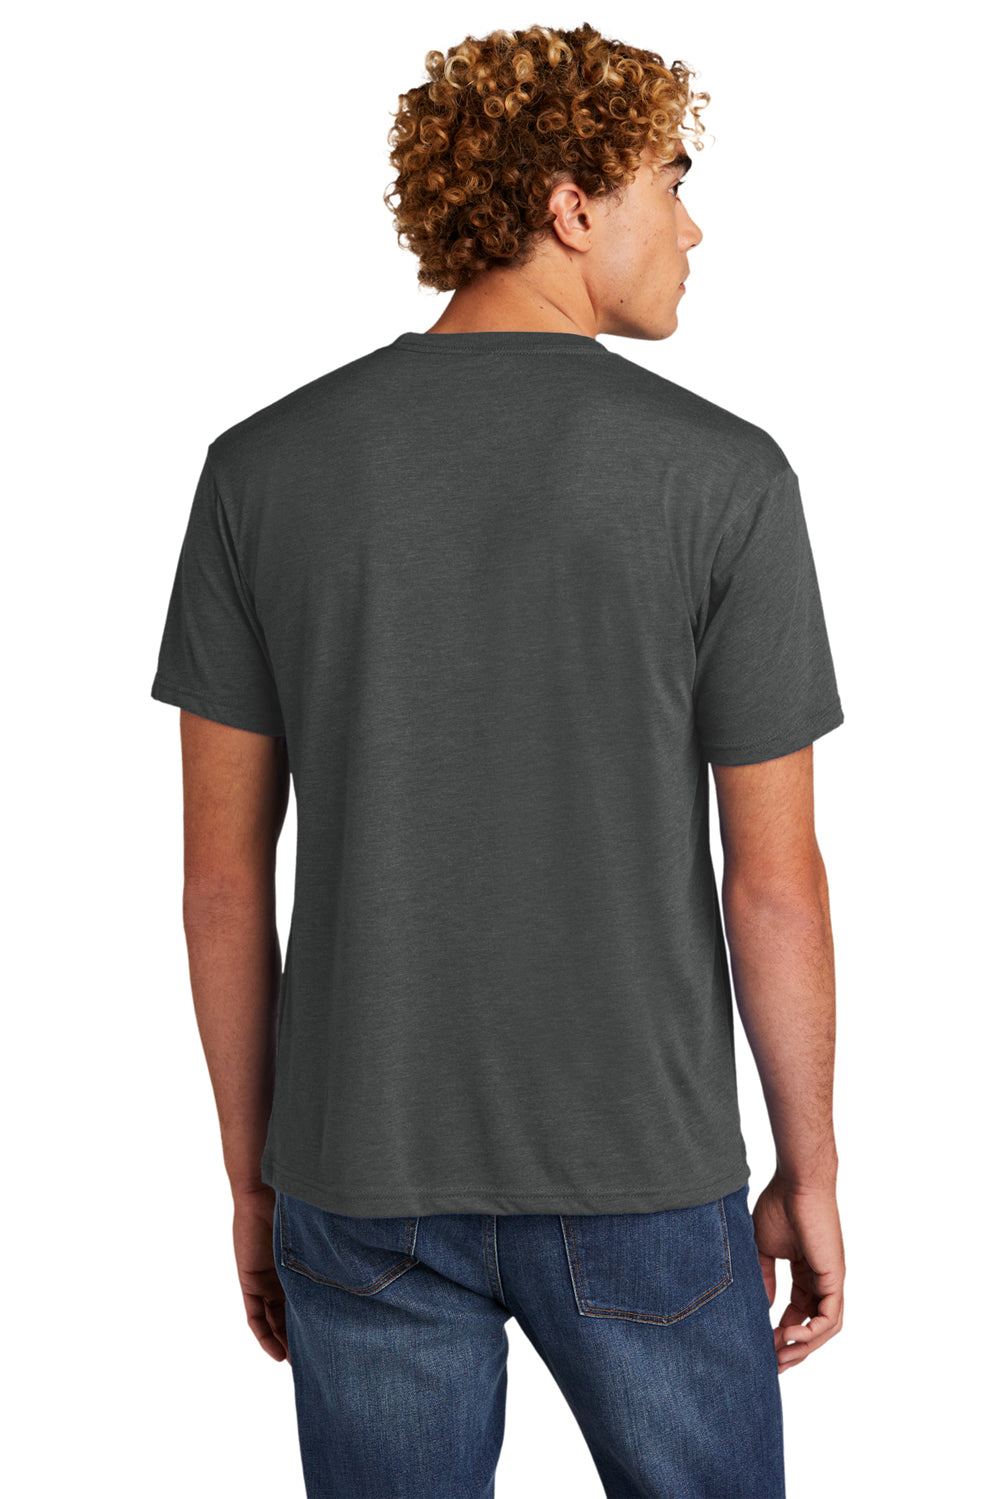 Next Level NL6010/6010 Mens Jersey Short Sleeve Crewneck T-Shirt Vintage Heavy Metal Grey Back